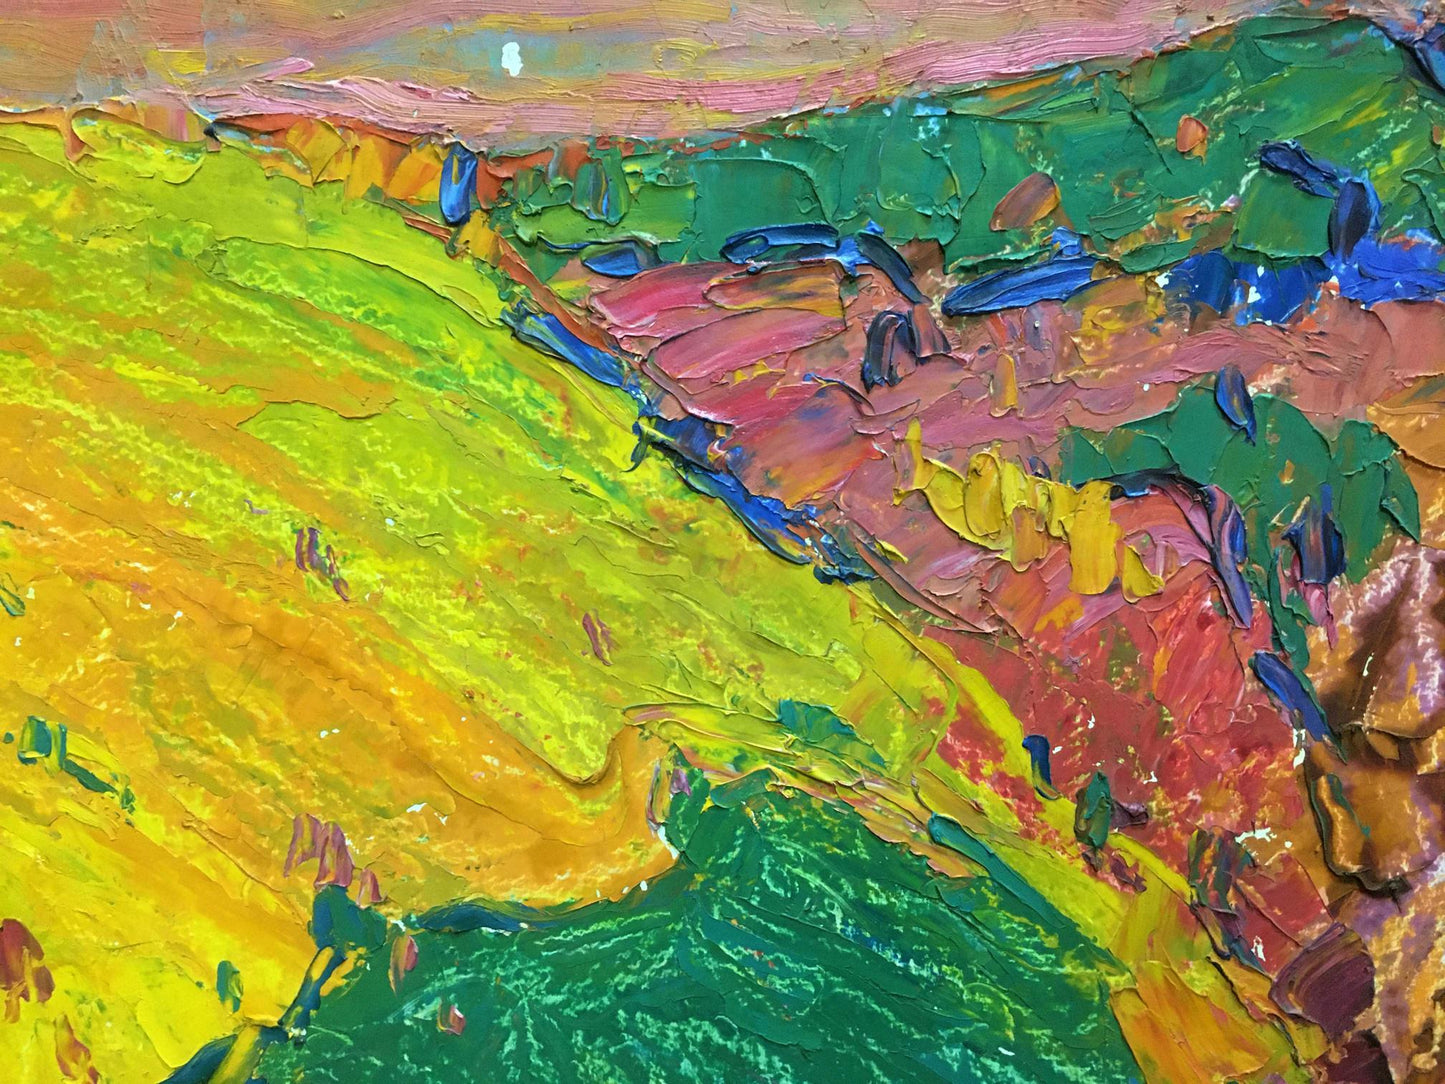 Oil painting Mountain landscape Mandrikova - Donchik Nadezhda Alekseevna